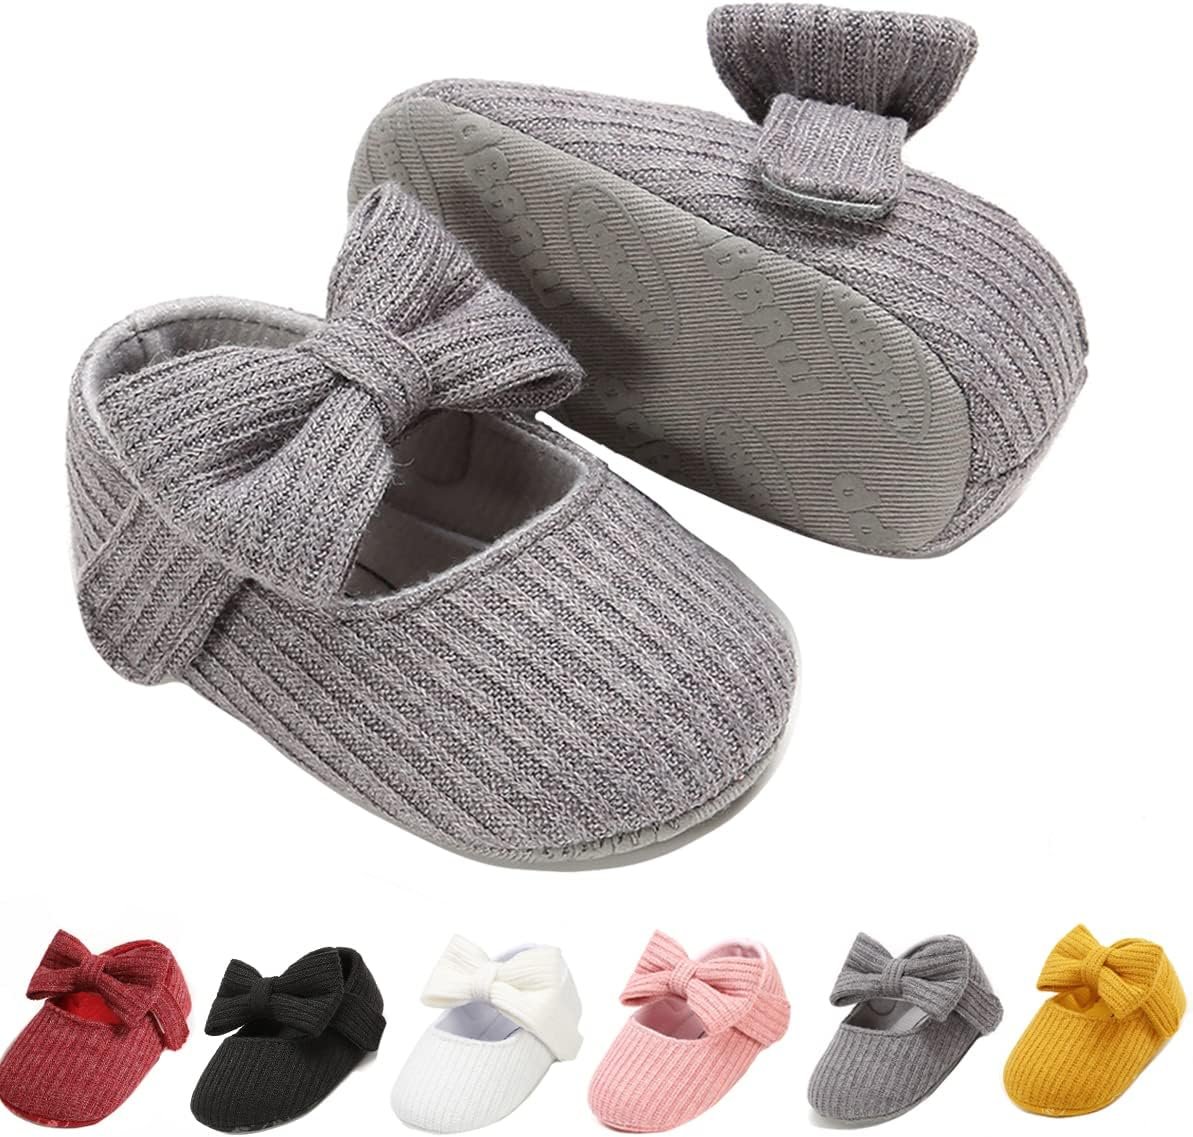 Ohwawadi Infant Baby Boys Girls Slippers Cozy Fleece Booties Soft Bottom Warm Cartoon Socks Newborn Crib Shoes